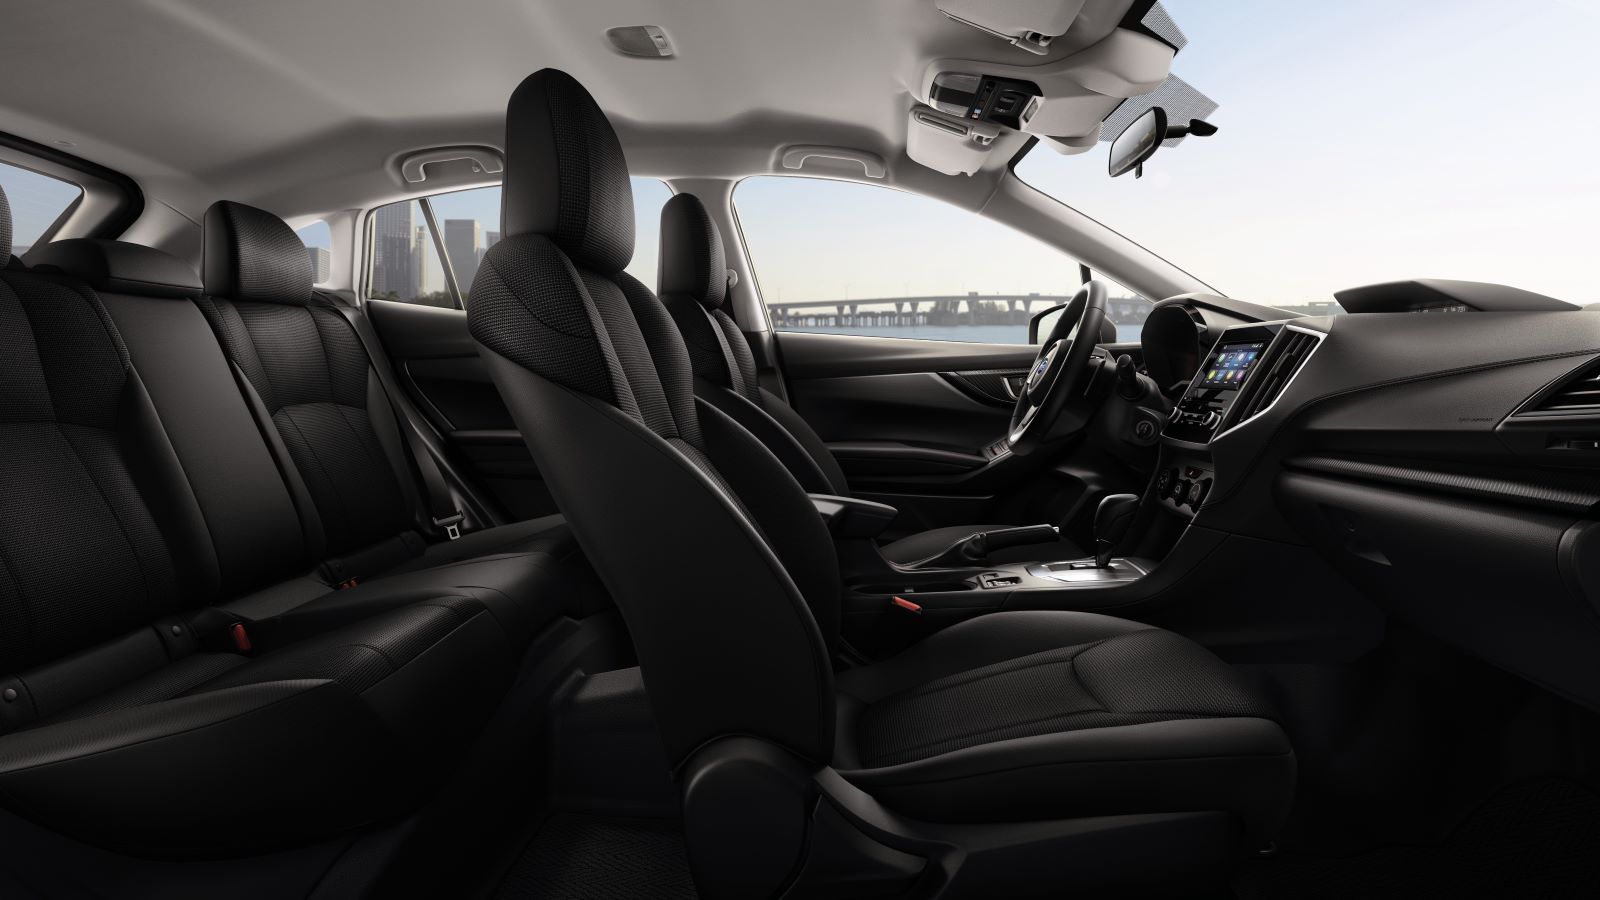 Interior view of a 2022 Subaru Impreza trim level with black upholstery